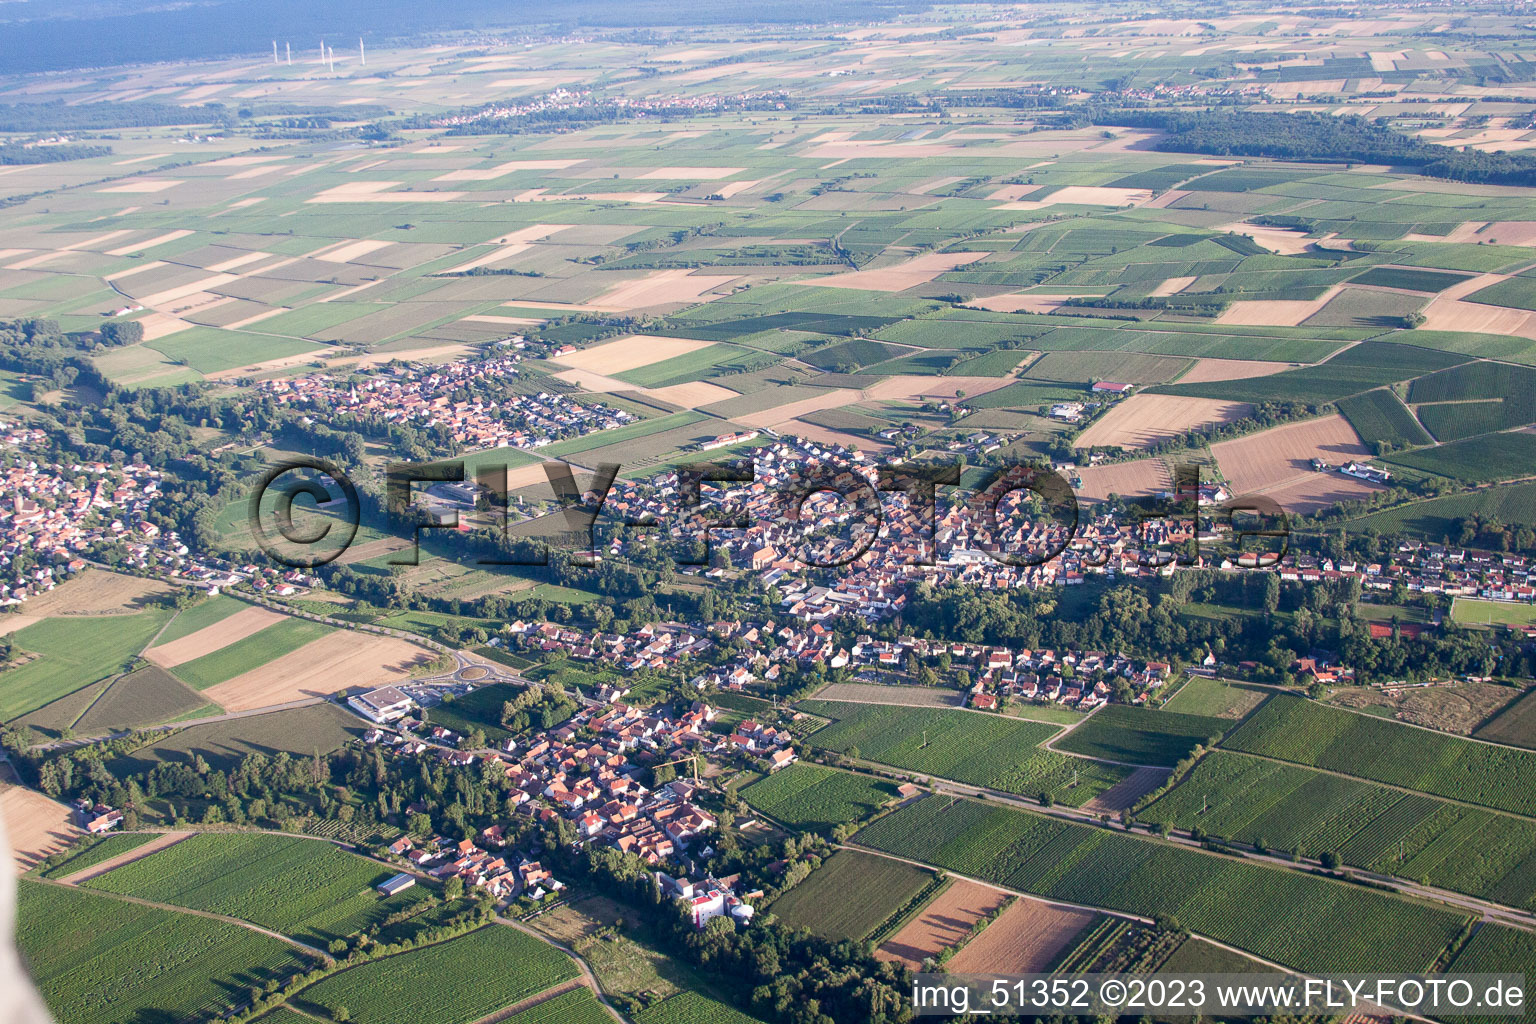 District Ingenheim in Billigheim-Ingenheim in the state Rhineland-Palatinate, Germany from the plane